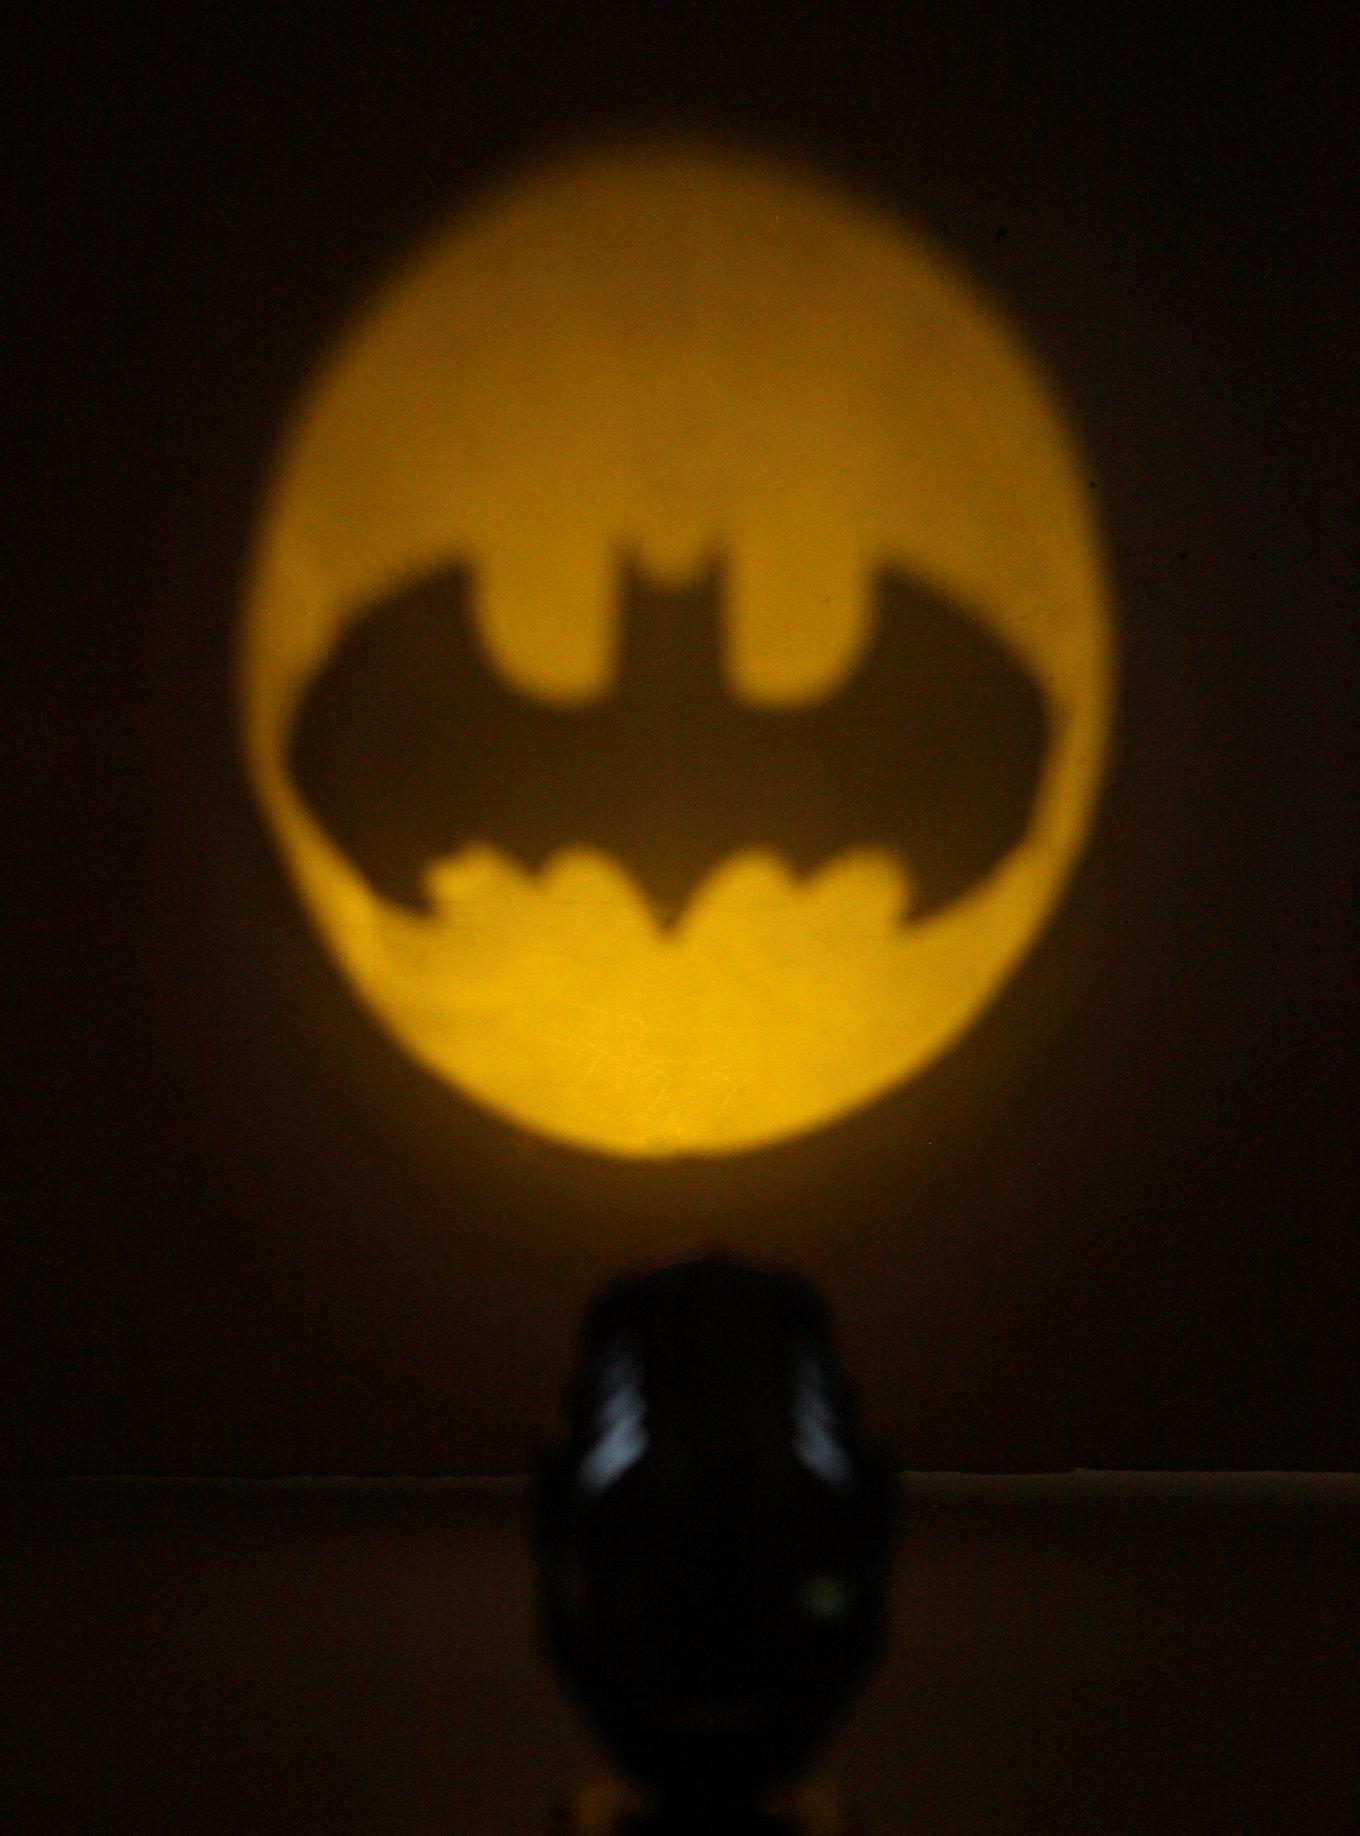 DC Comics Batman Mini Bat-Signal, , alternate